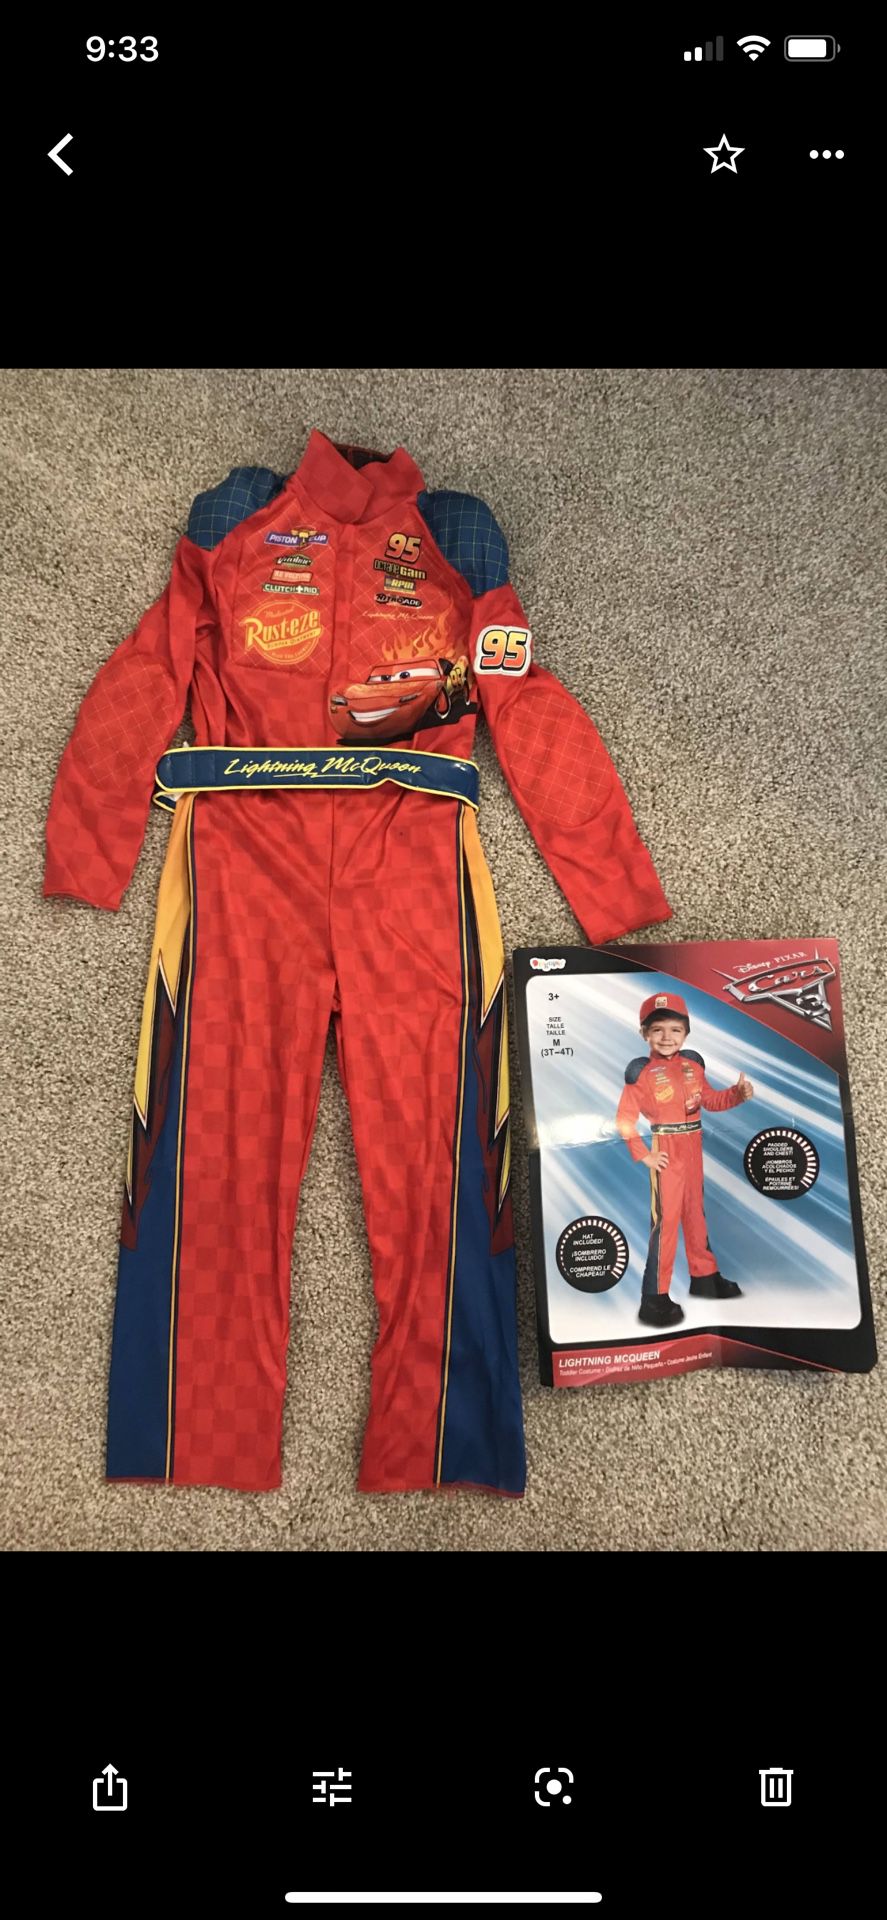 Kids Disney Lightning Mcqueen Race Car Driver Costume—Excellent condition